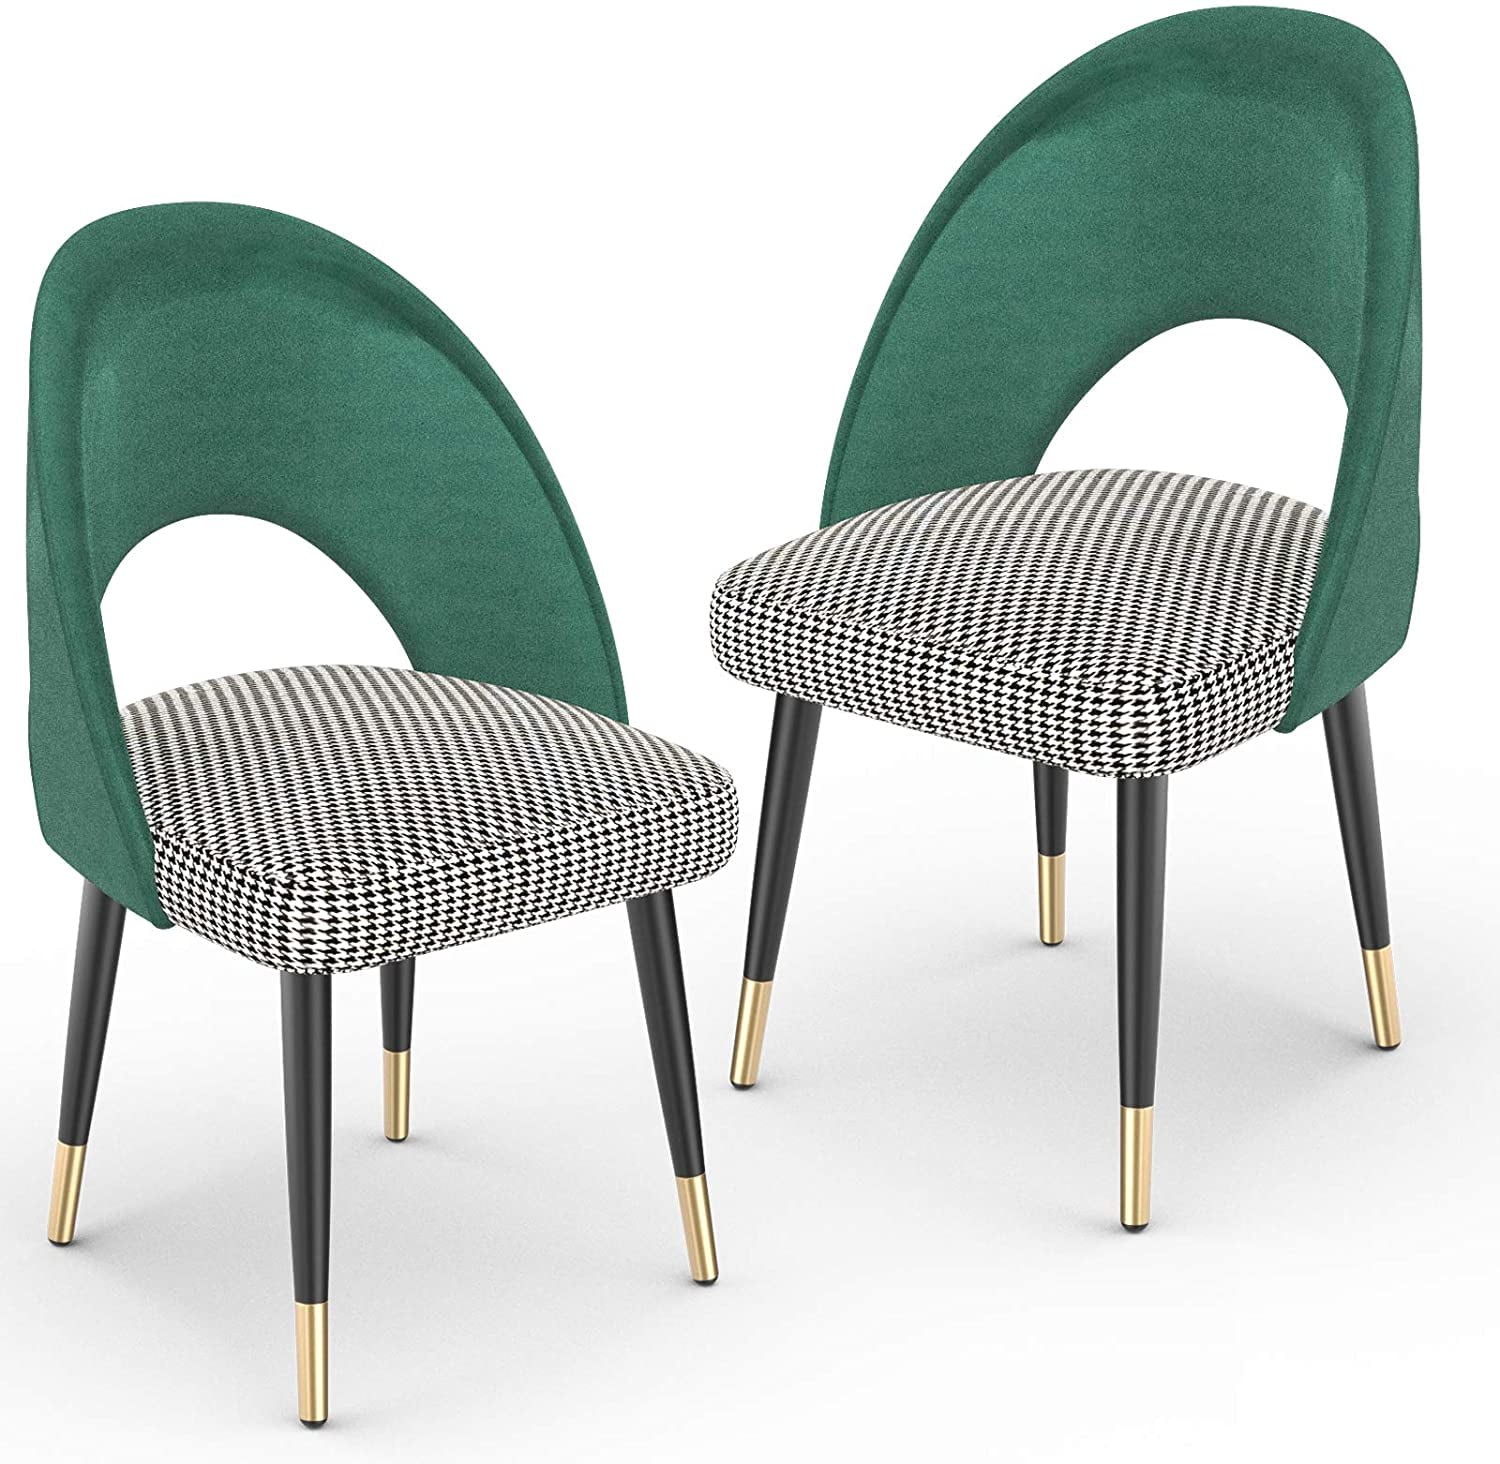 Mecor Modern Velvet Dining Chairs Set, Green Upholstered Dining Room Chairs